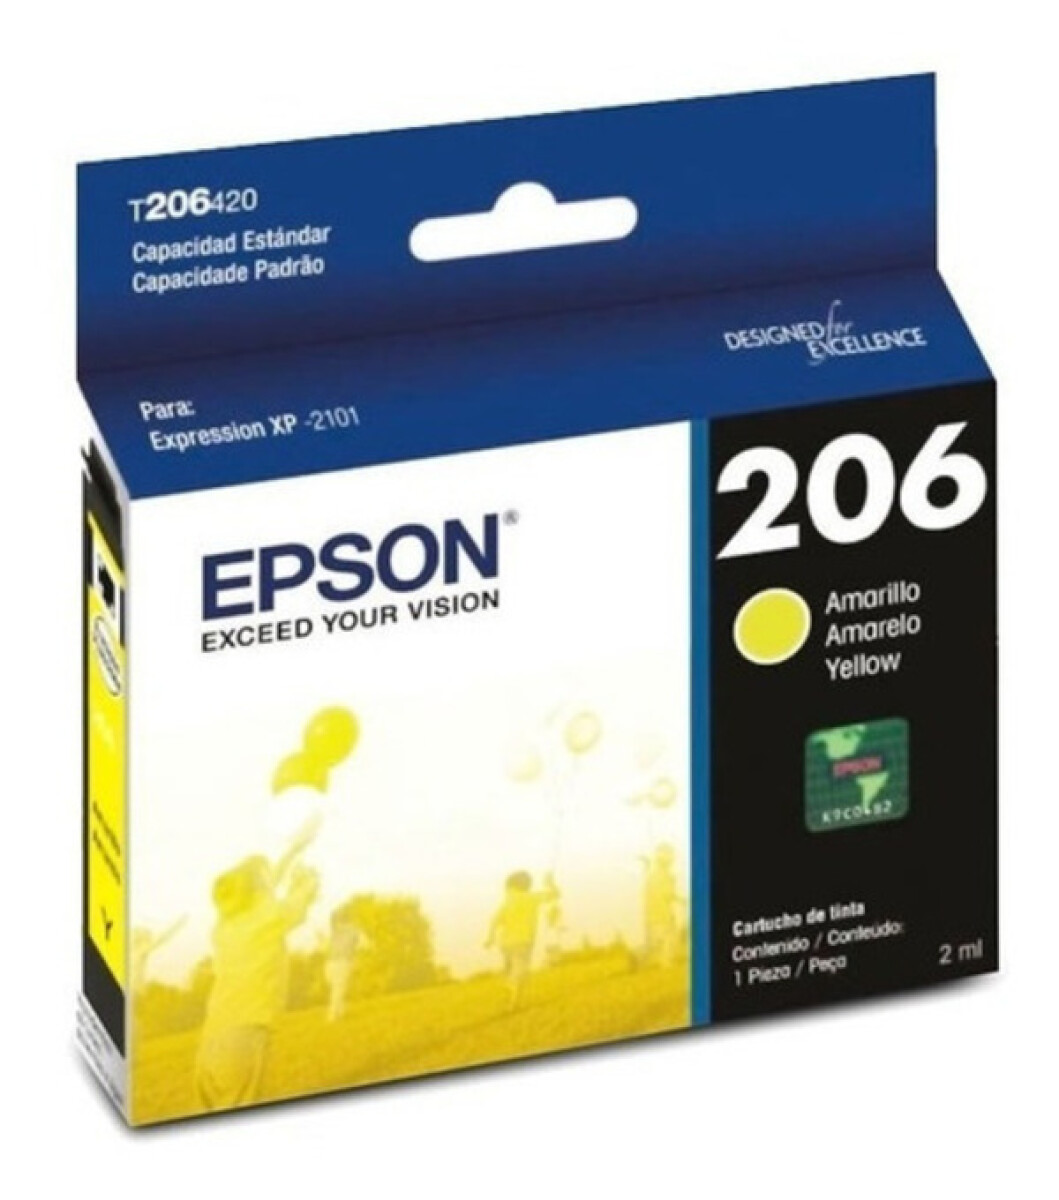 EPSON T206420-AL XP2101 AMARILLO - 2816 